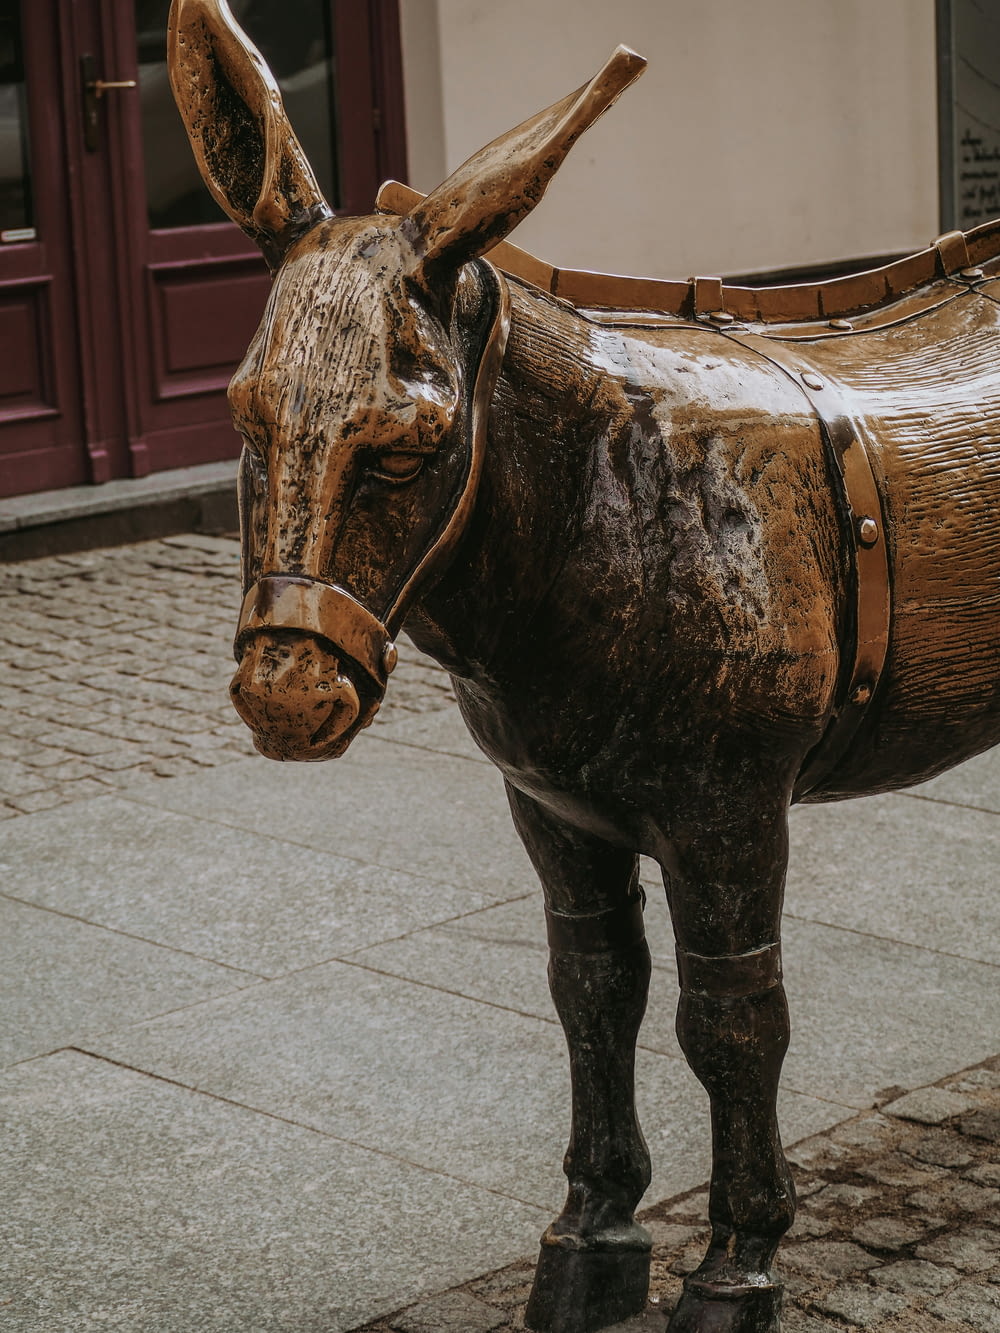 a statue of a donkey on a sidewalk